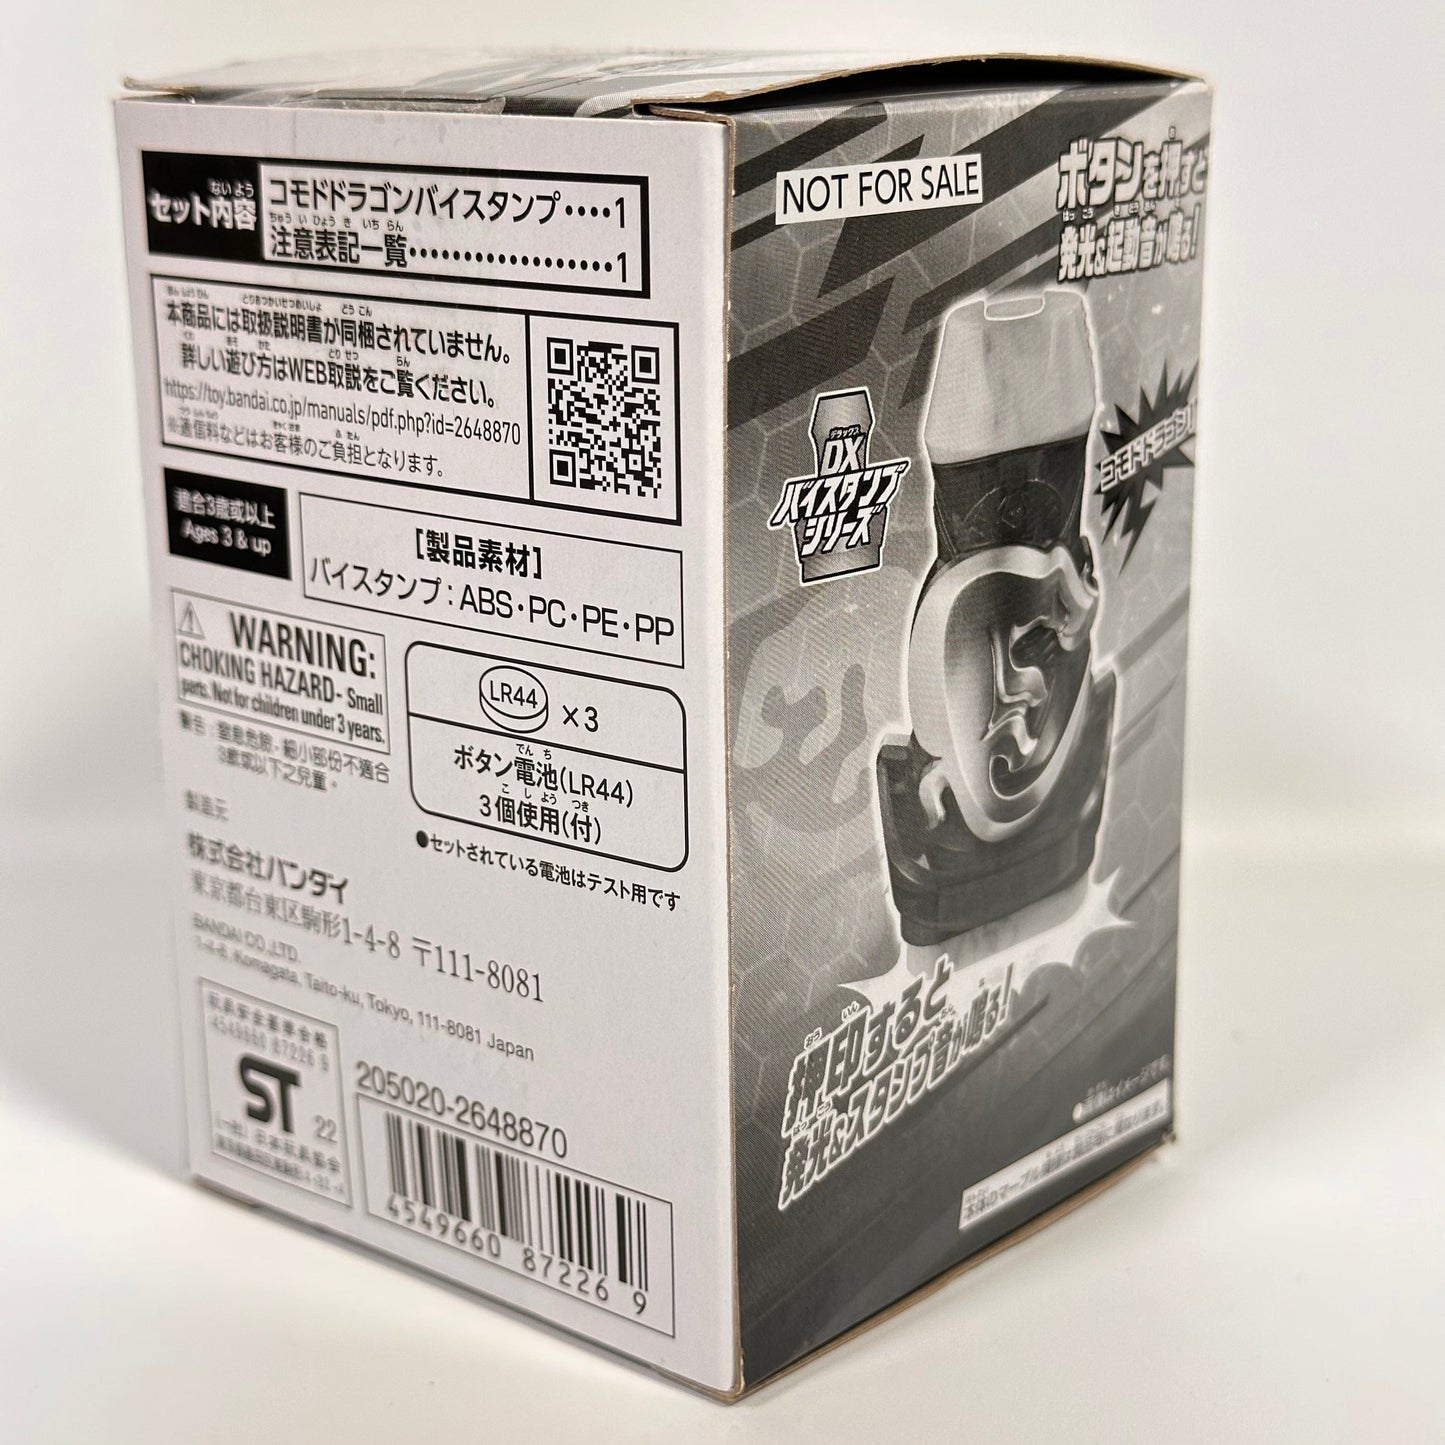 [BOXED] Kamen Rider Revice: DX Komodo Dragon Vistamp -Premium Bandai Exclusive- | CSTOYS INTERNATIONAL